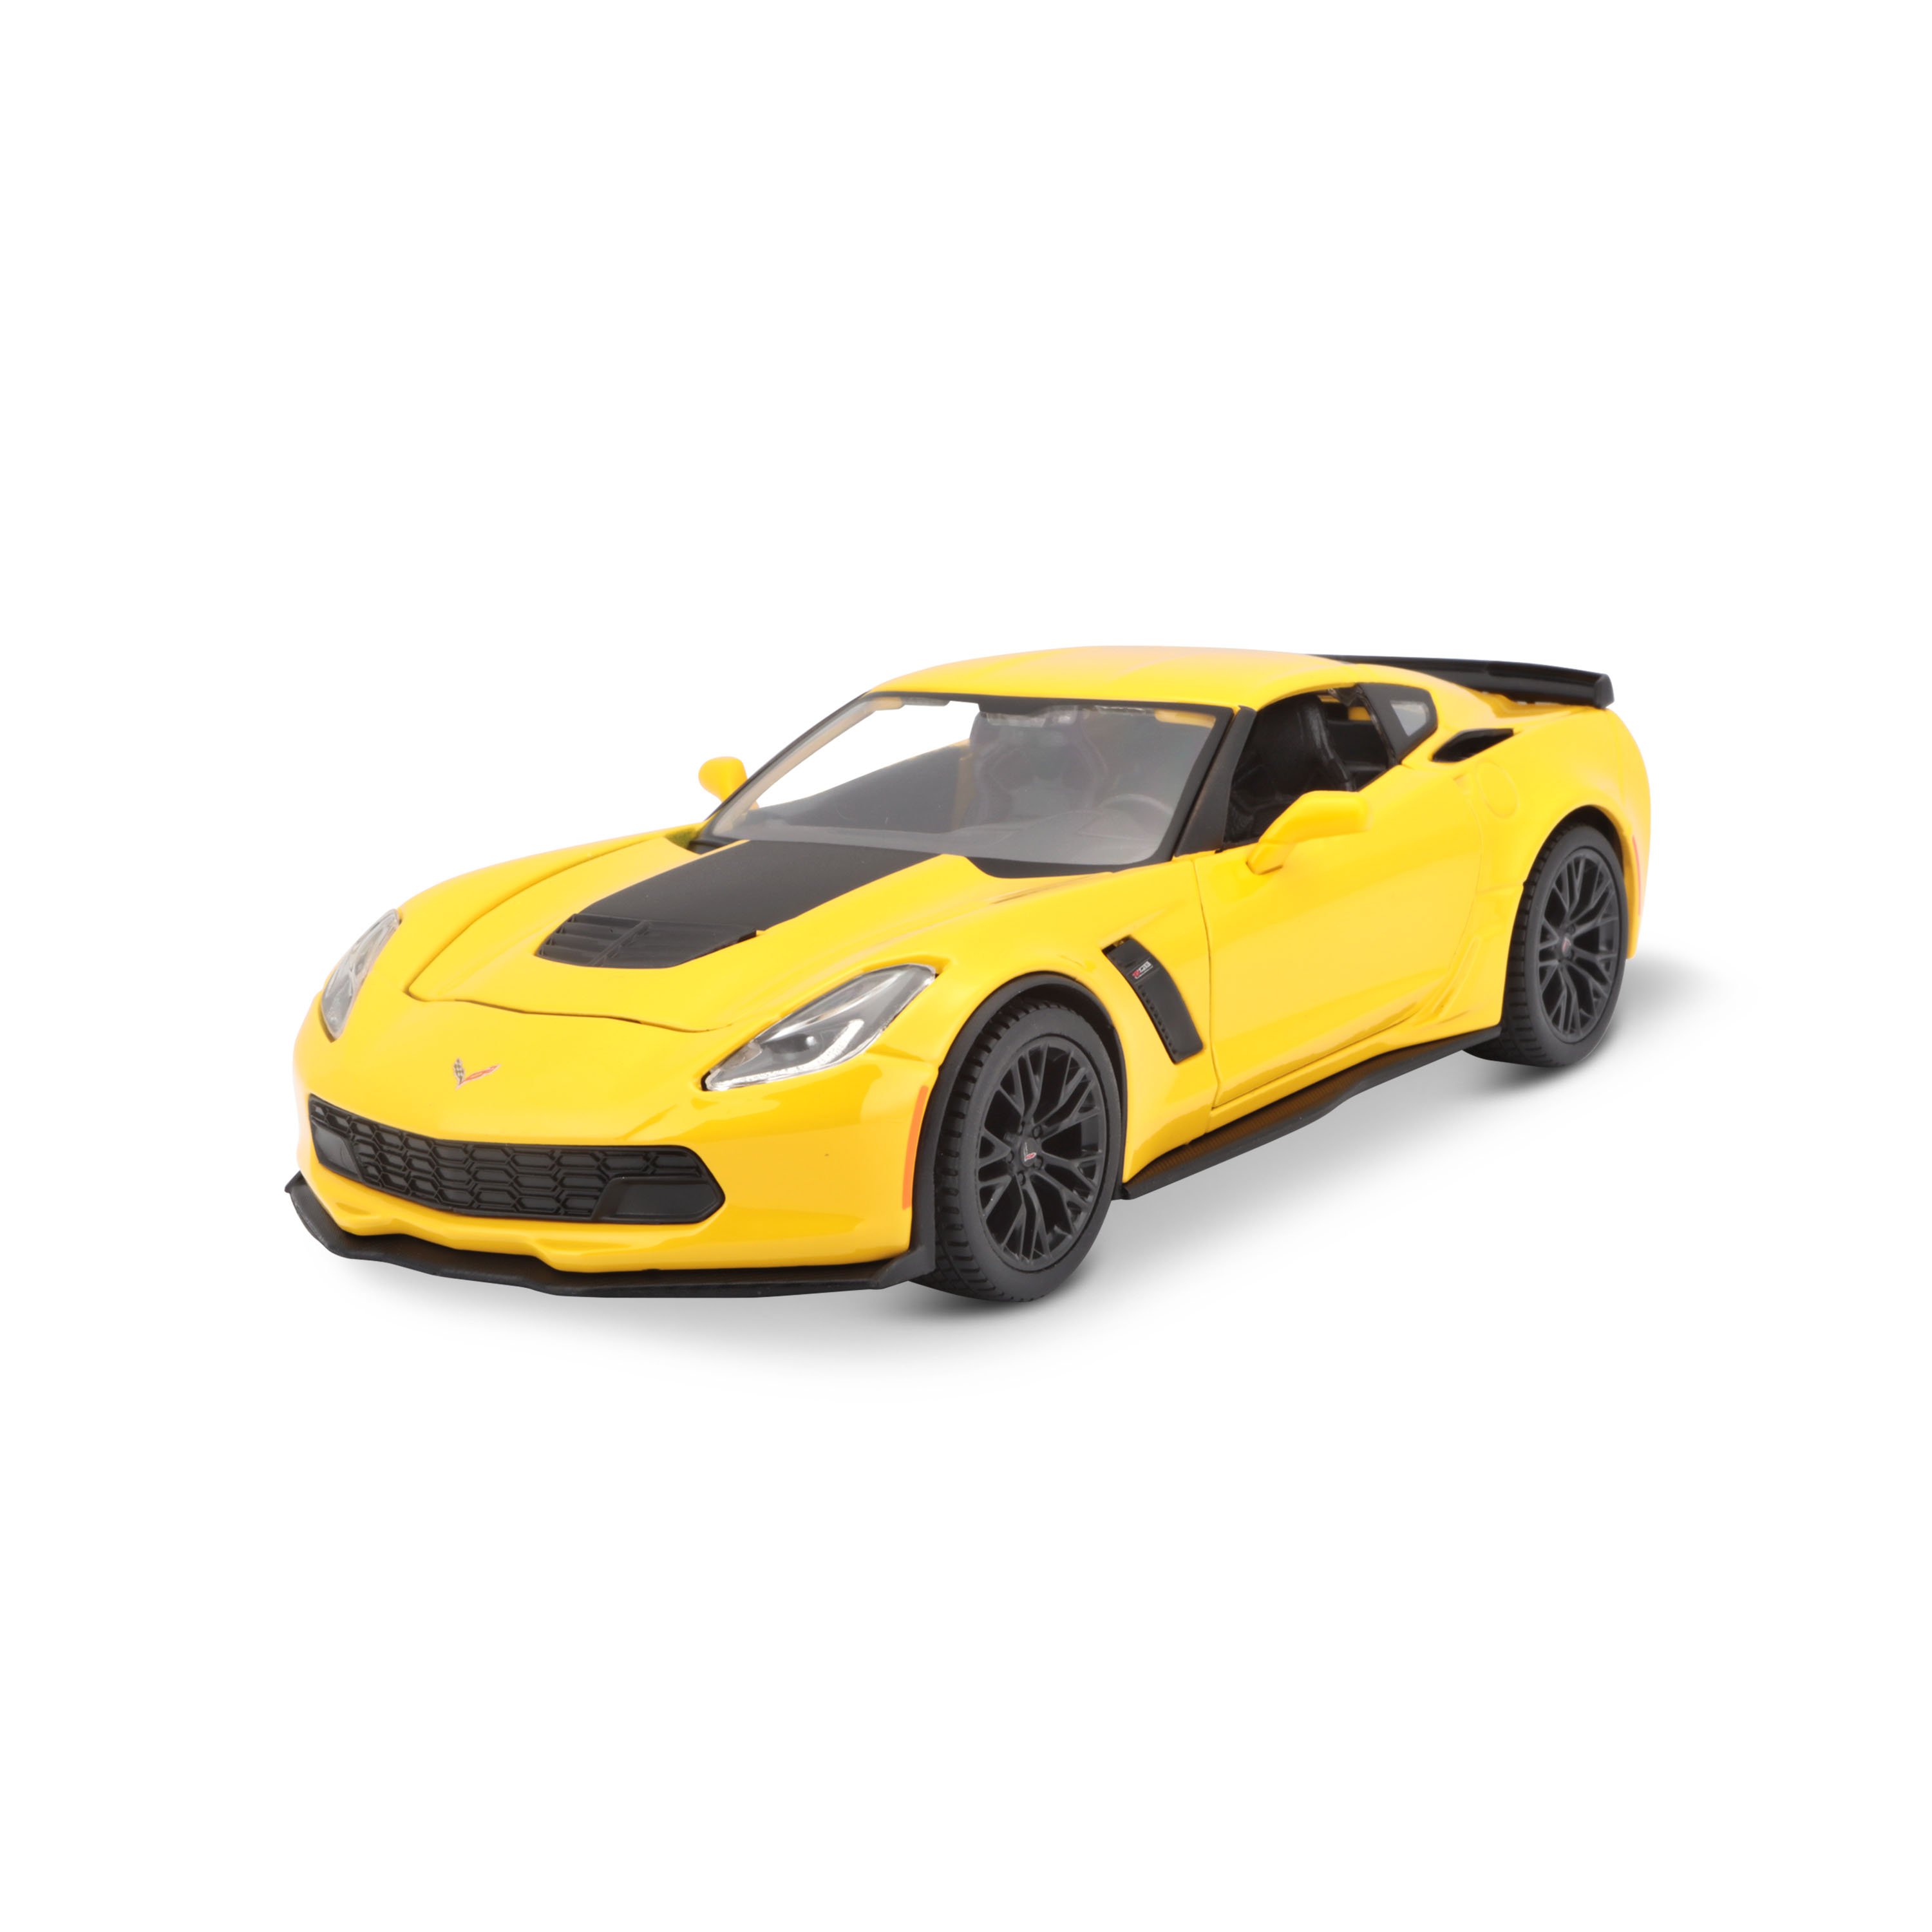 Игровая автомодель Maisto 2015 Chevrolet Corvette Z06 желтый, 1:24 (31133 yellow) - фото 2